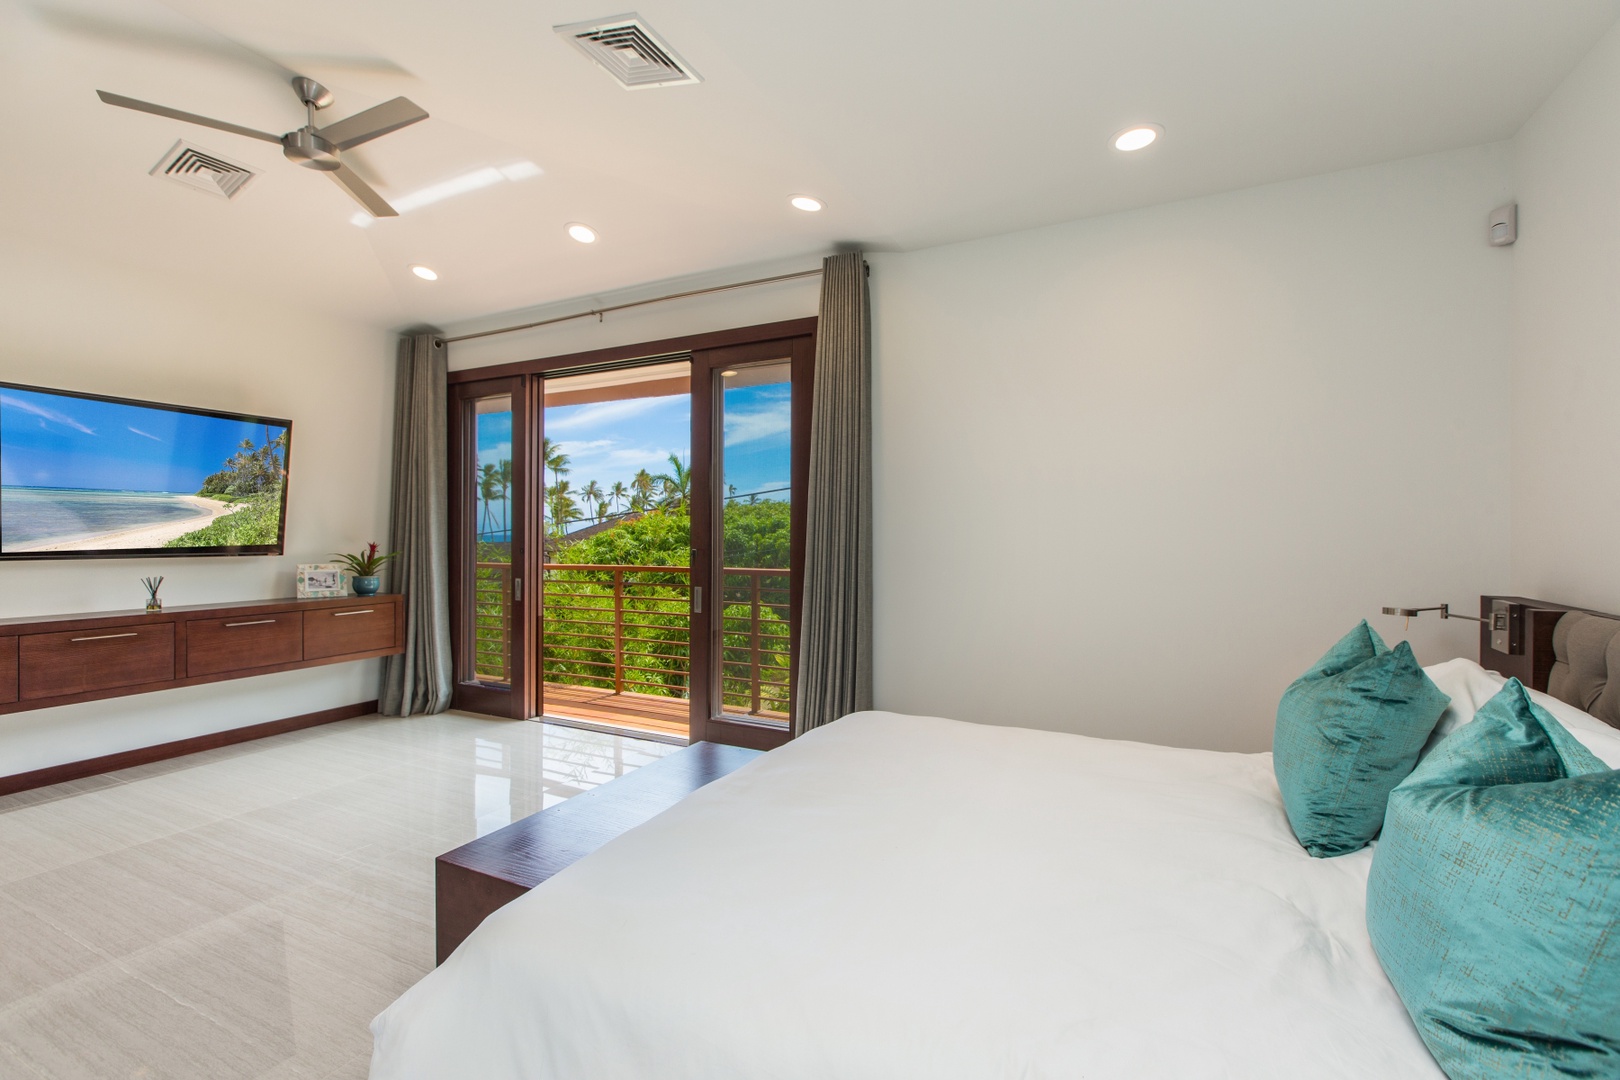 Honolulu Vacation Rentals, Le Reve at Diamond Head* - Bedroom 2 - King bed and en-suite